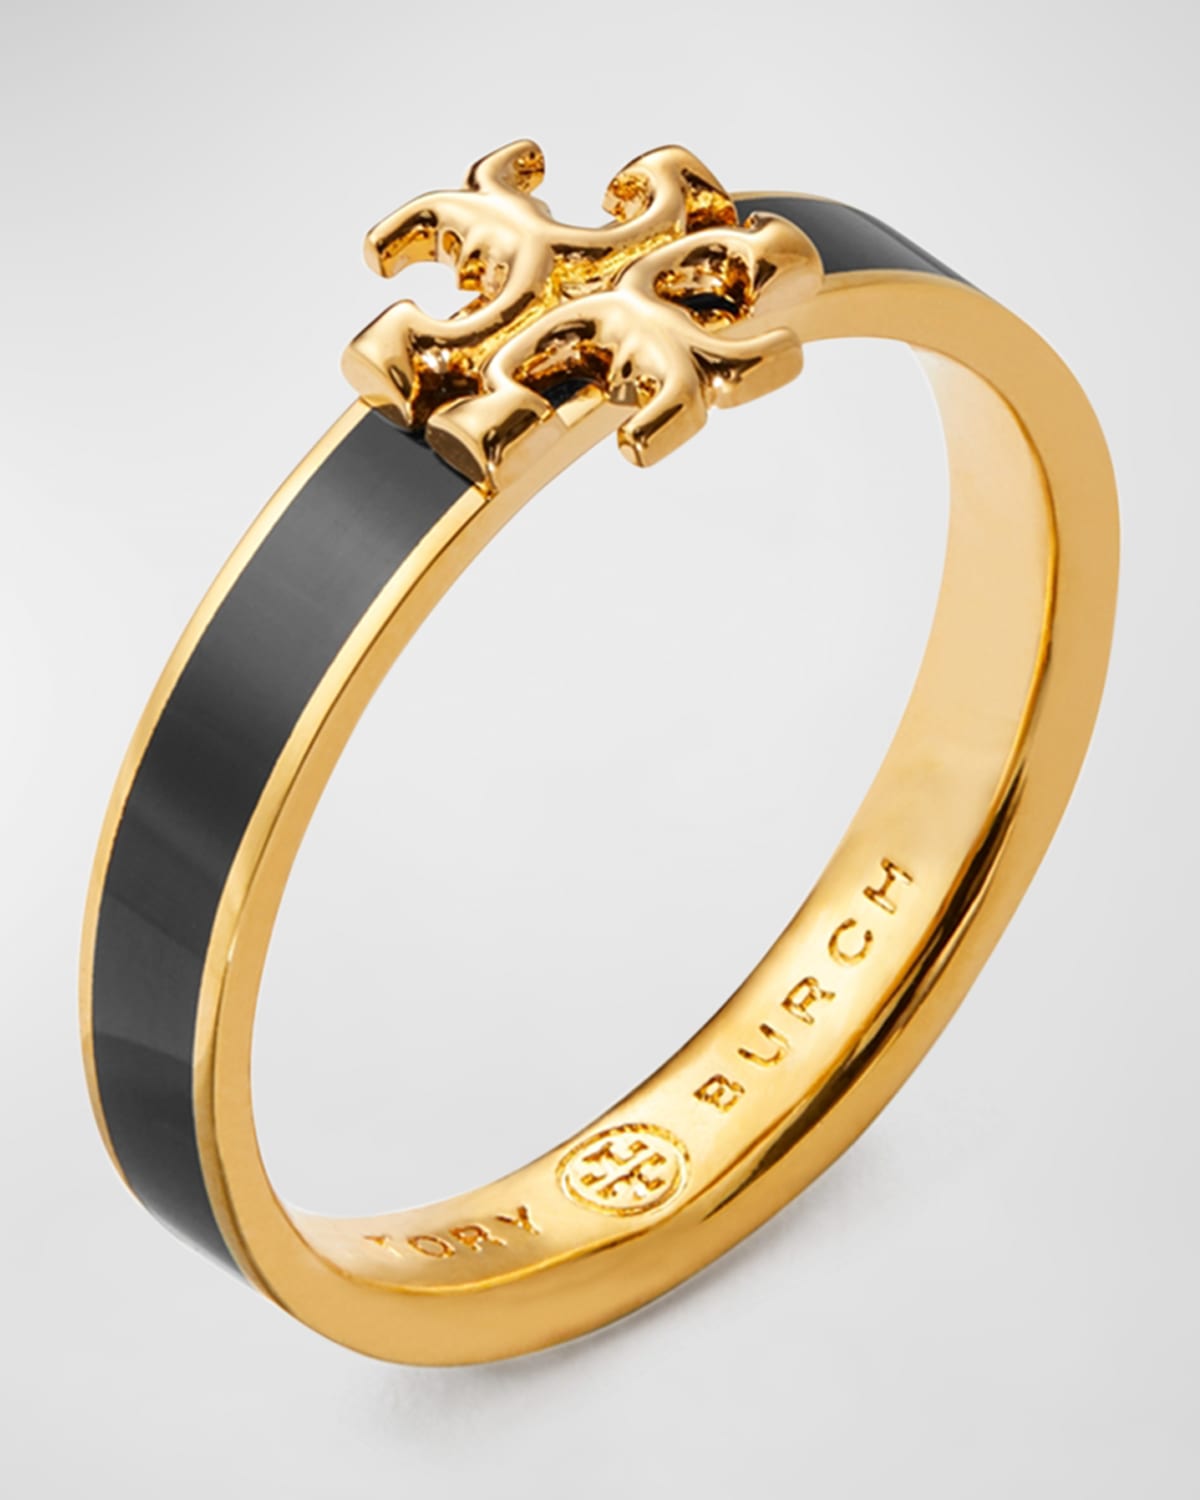 Kira Enamel Ring